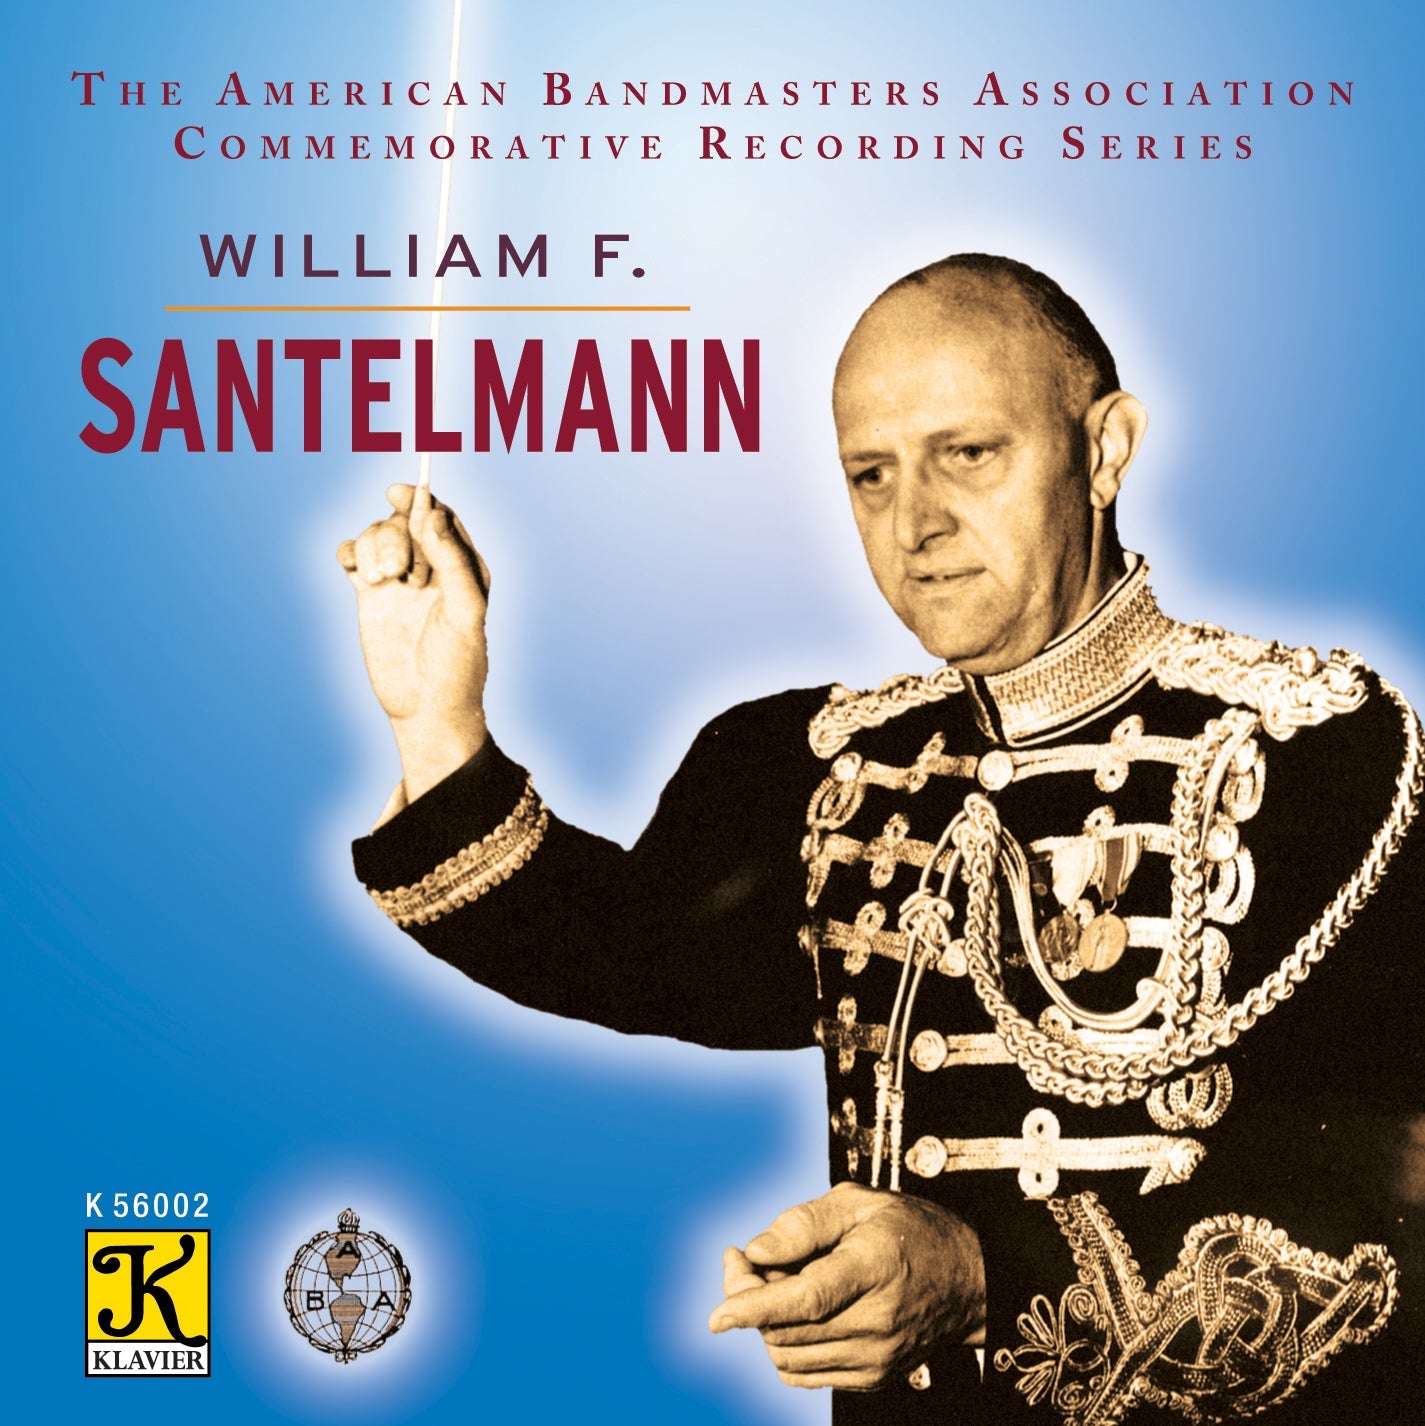 The American Bandmasters Association Commemorative Recording